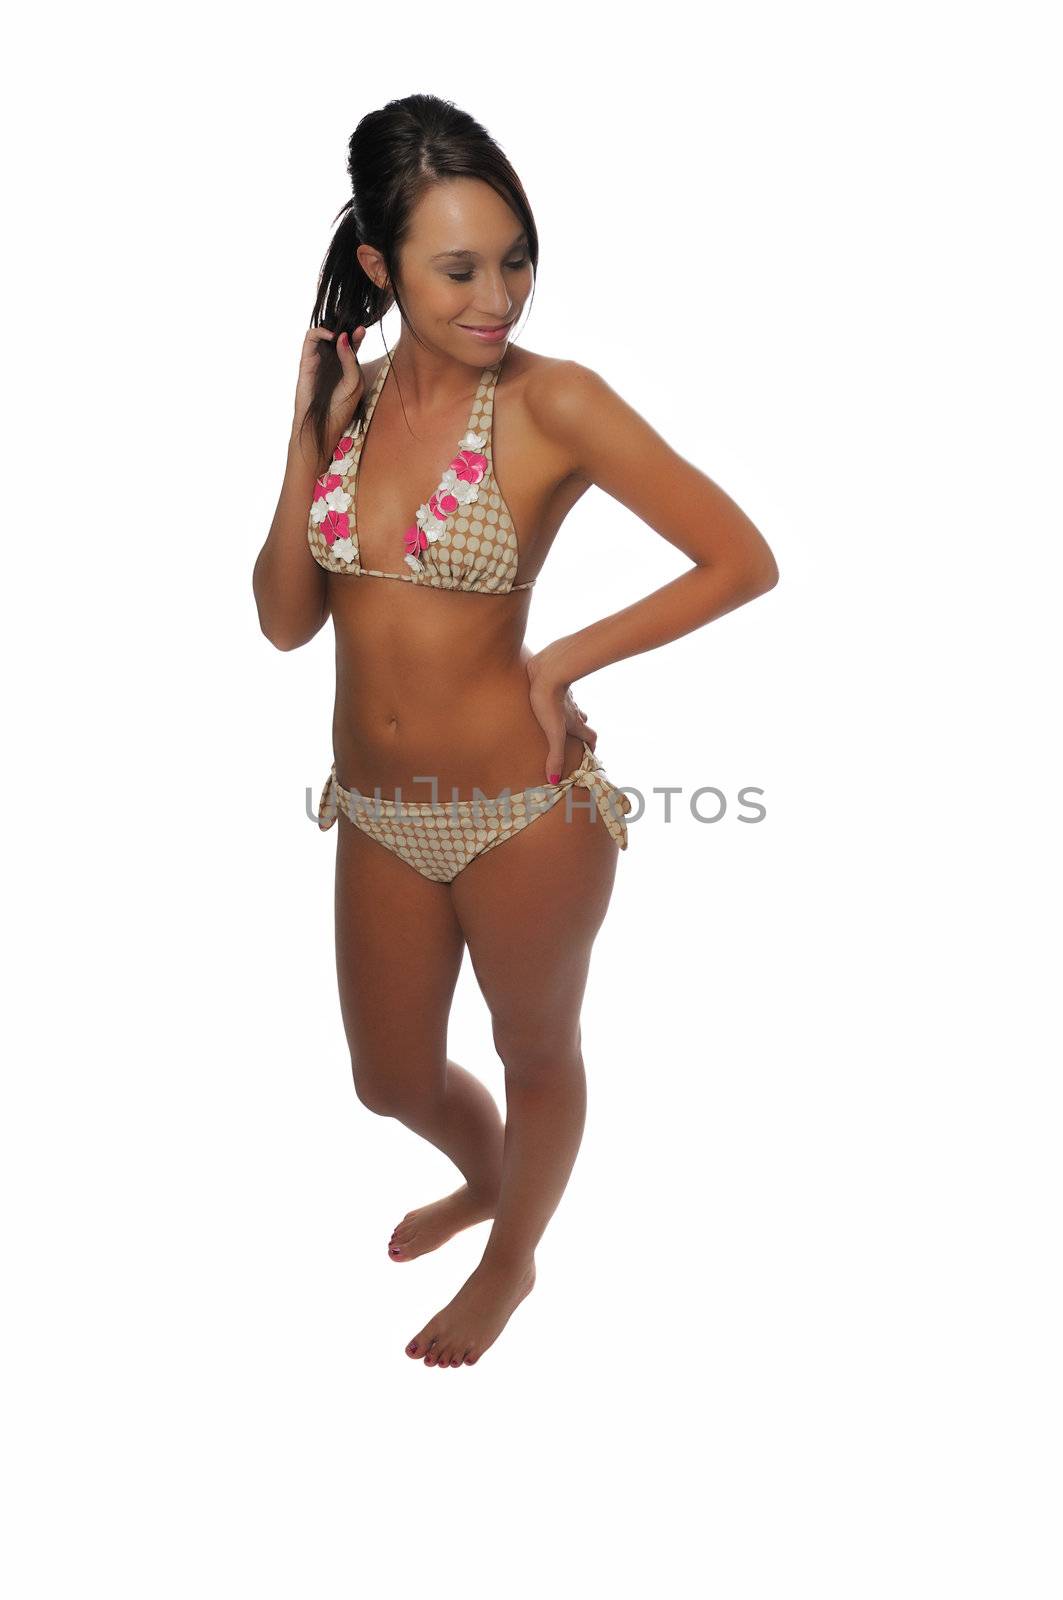 bikini model by PDImages